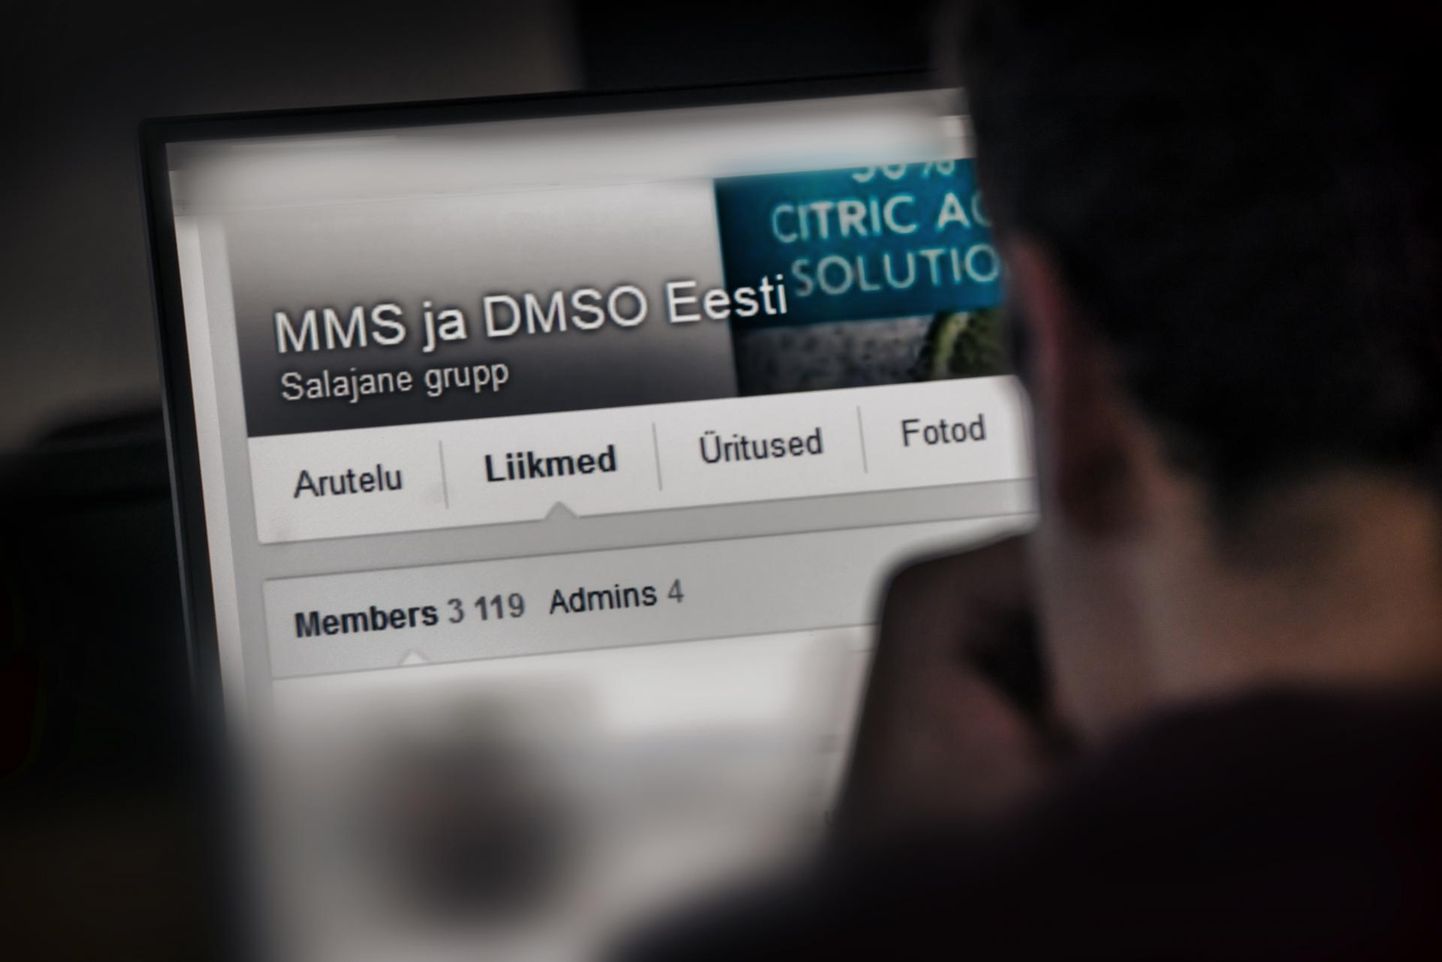  MMS ja DMSO Eesti salajane grupp Facebookis.